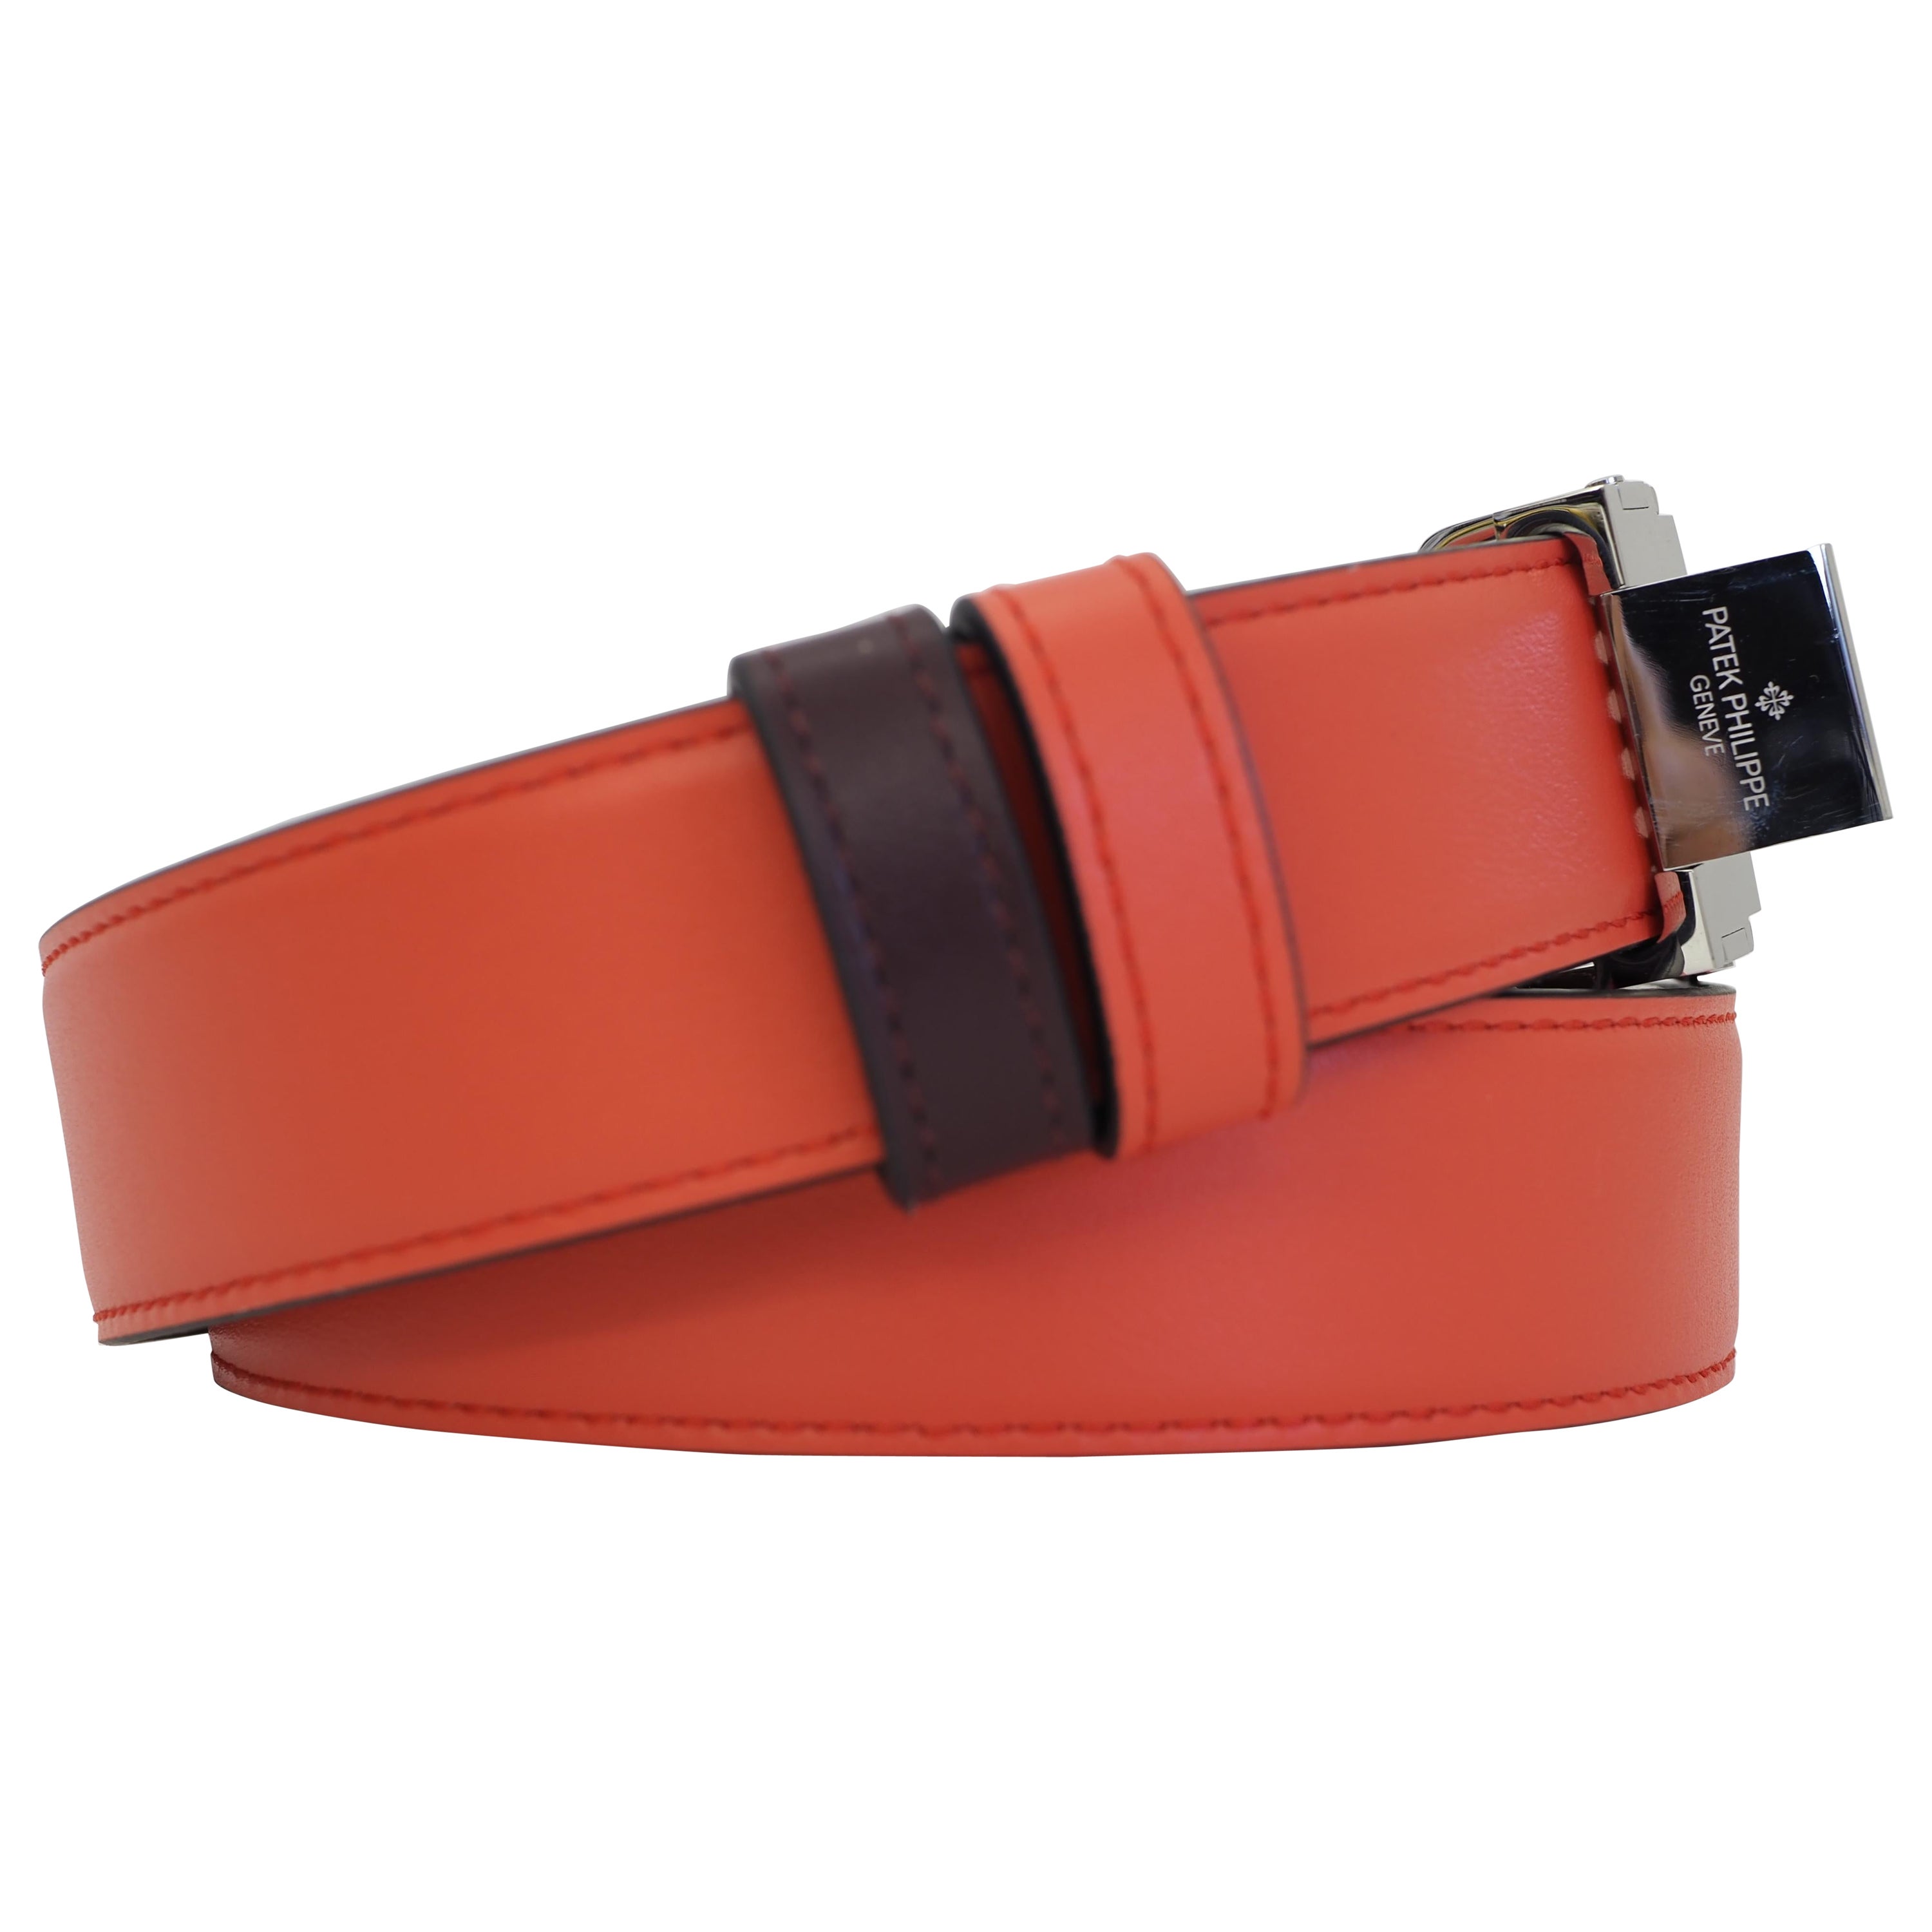 Patek Philippe leather belt